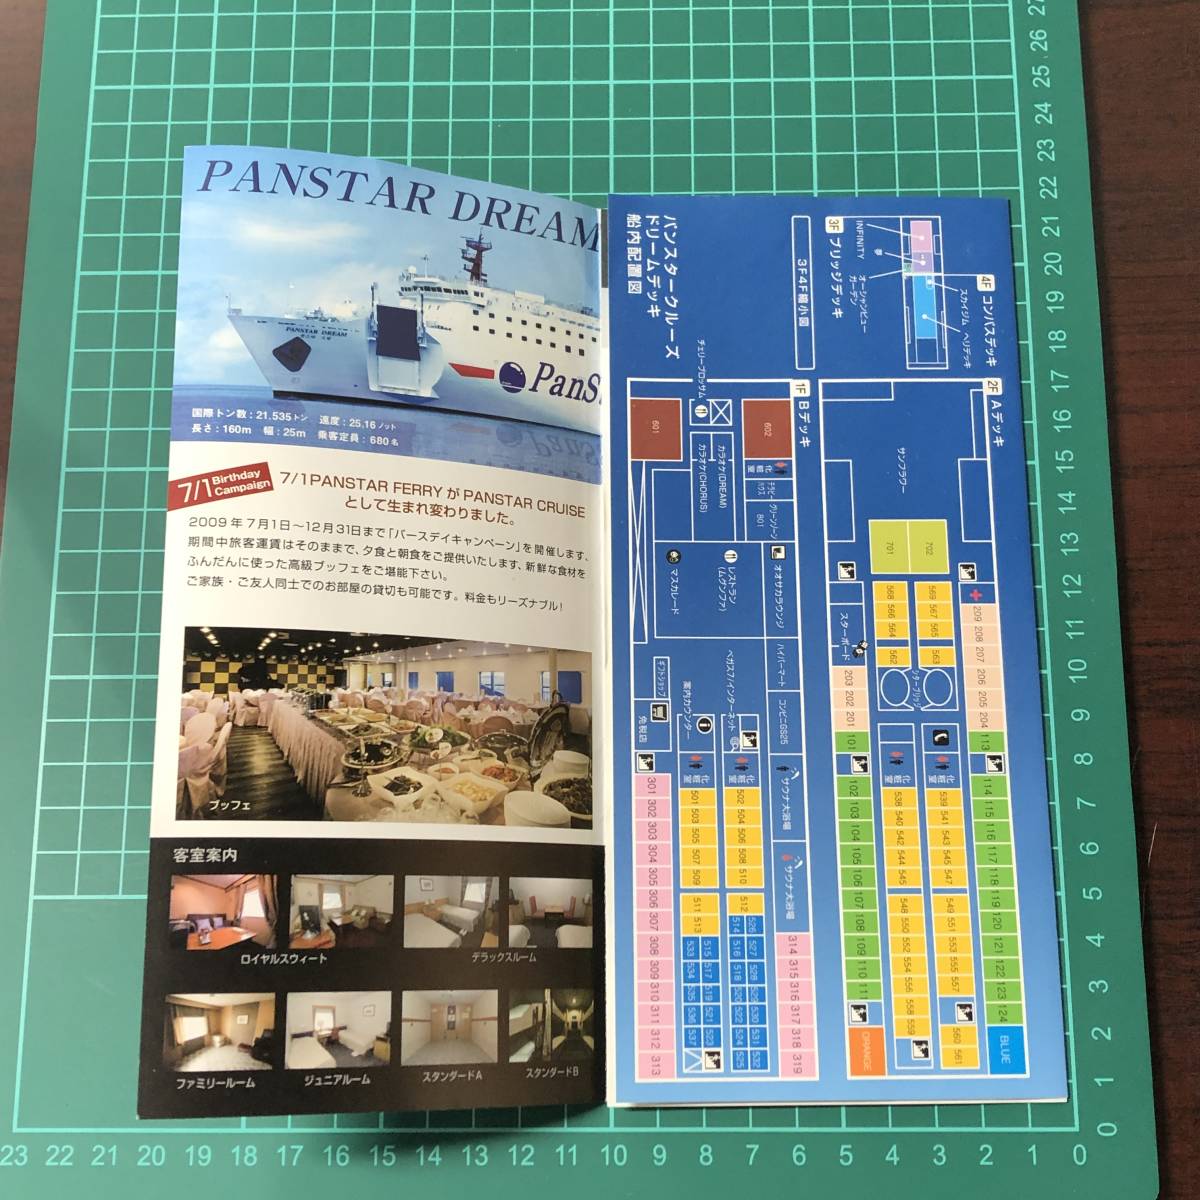 PanStar Cruise хлеб Star круиз Osaka = котел гора PANSTER DREAM плата таблица имеется каталог проспект [F0412]